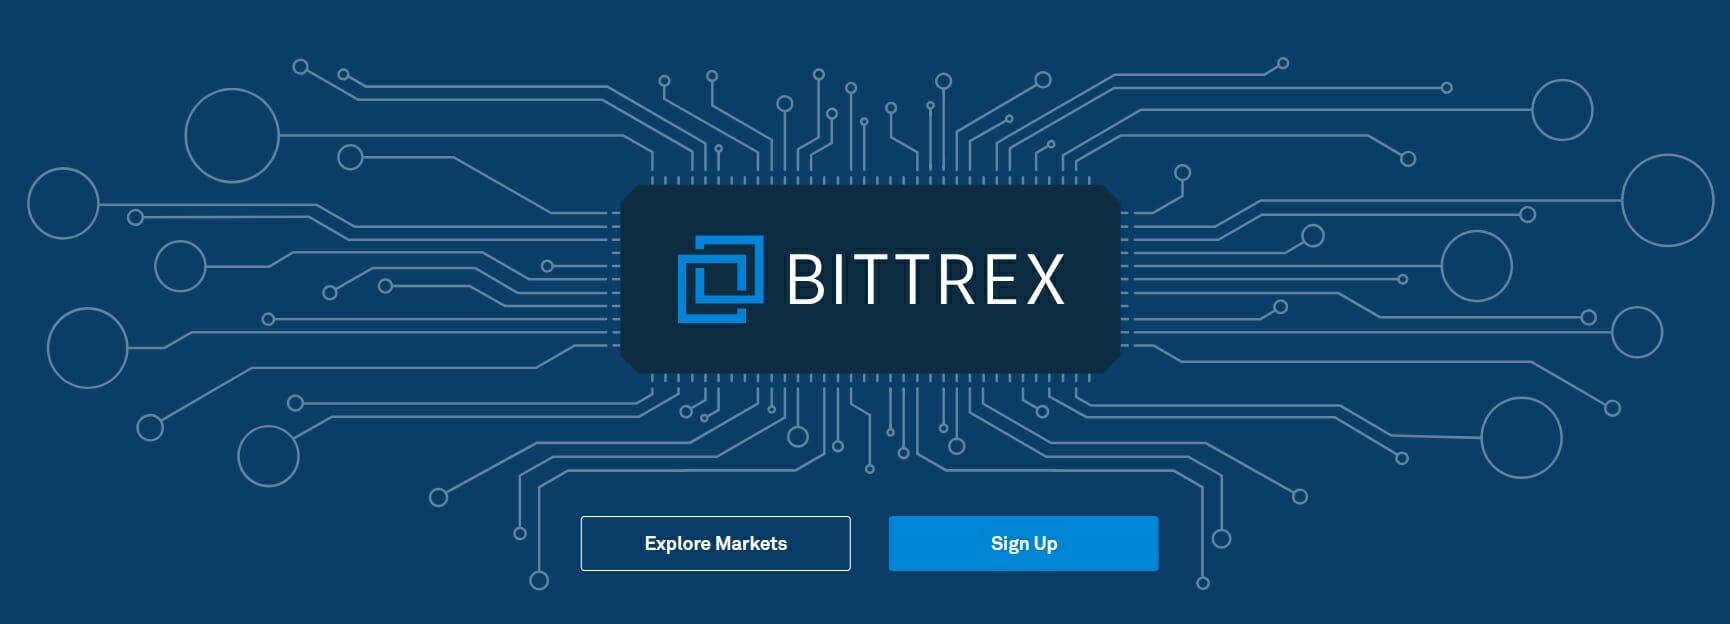 Bittrex handelsplattform